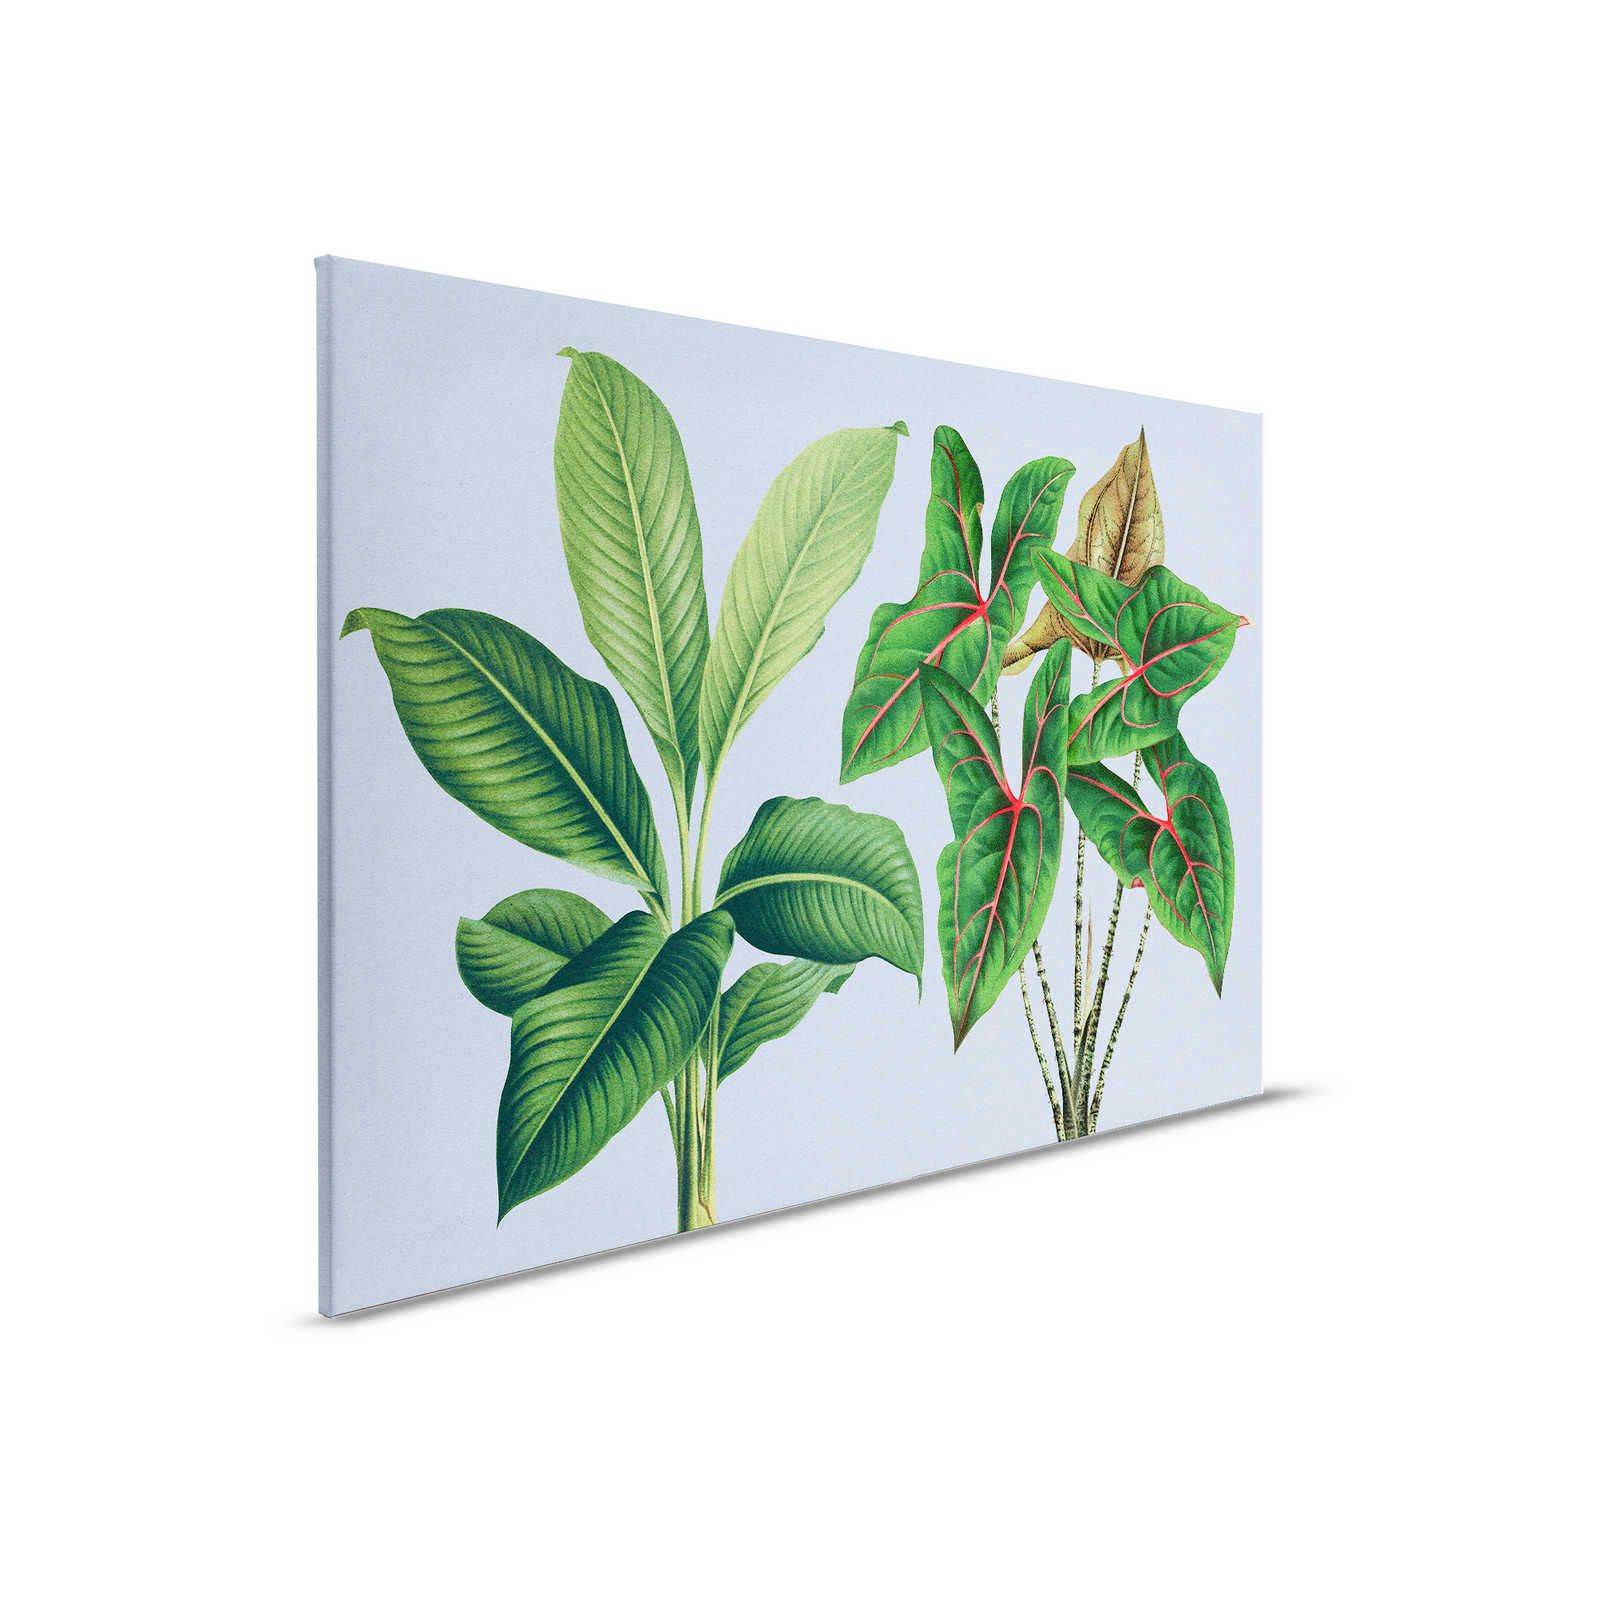 Leaf Garden 1 - Quadro su tela Foglie blu con piante tropicali - 0,90 m x 0,60 m
